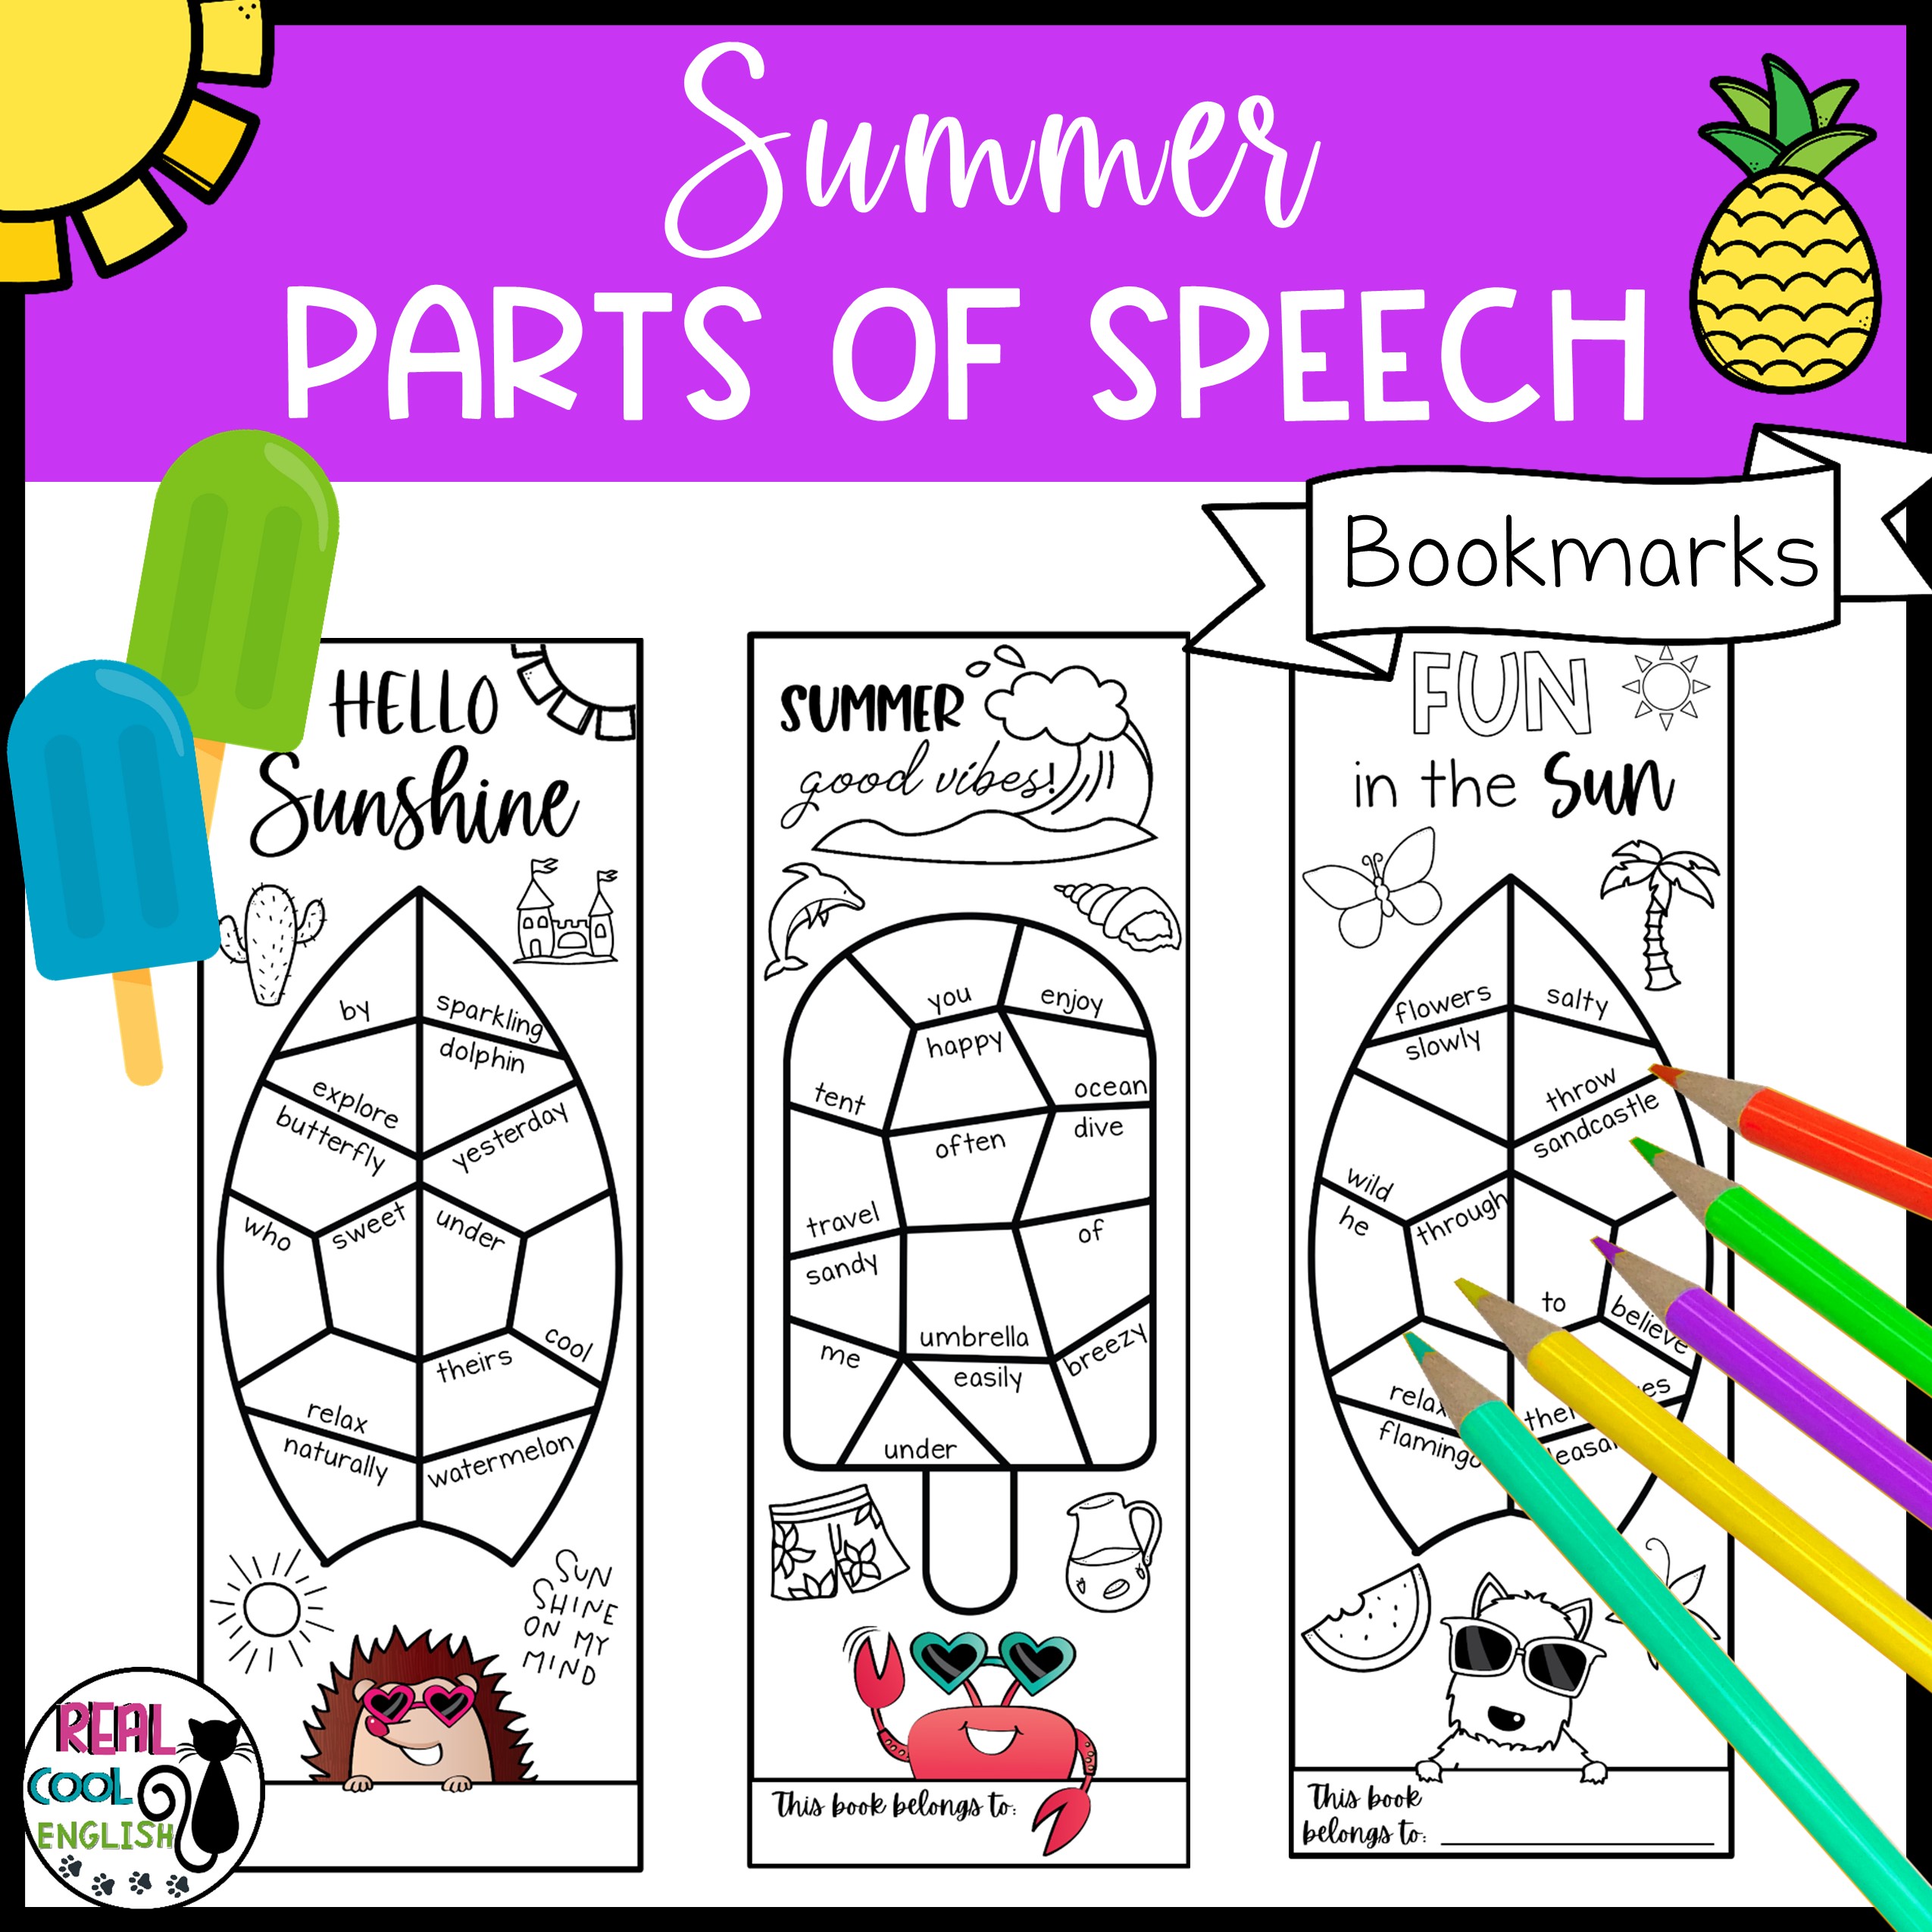 Summer Parts of Speech Bookmark